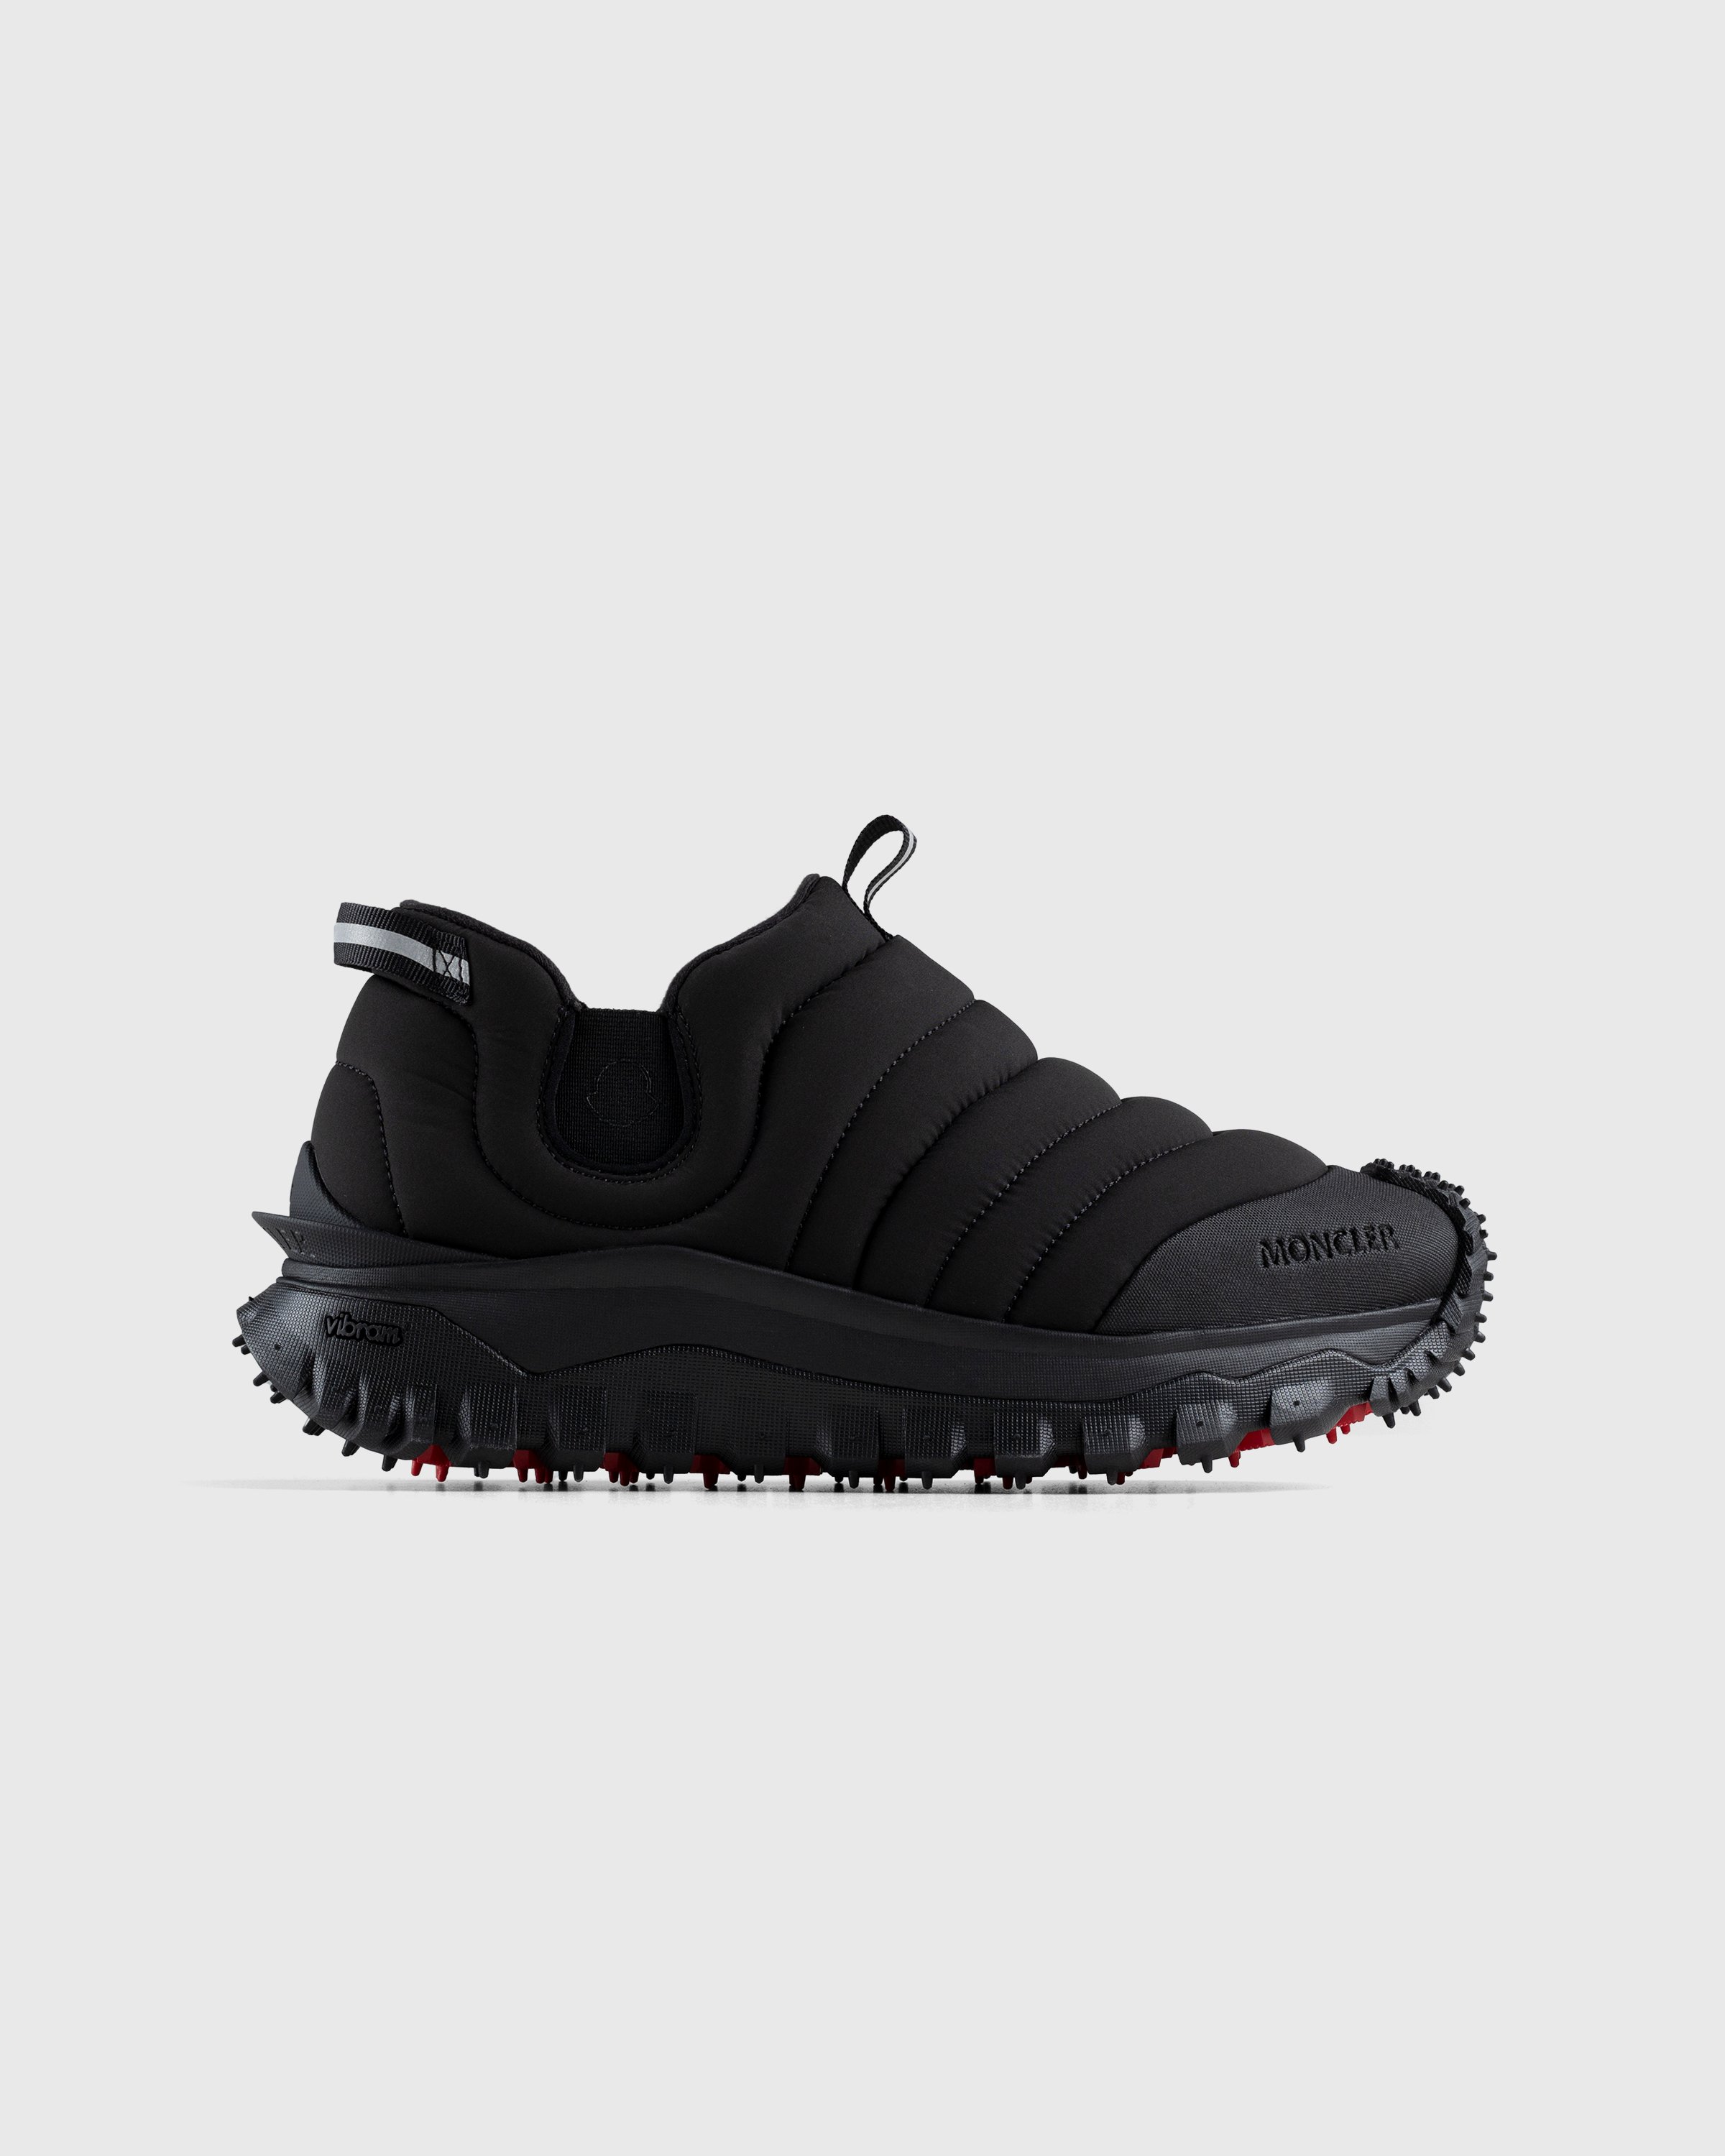 Moncler - Après Trail Sneakers Black - Footwear - Black - Image 1